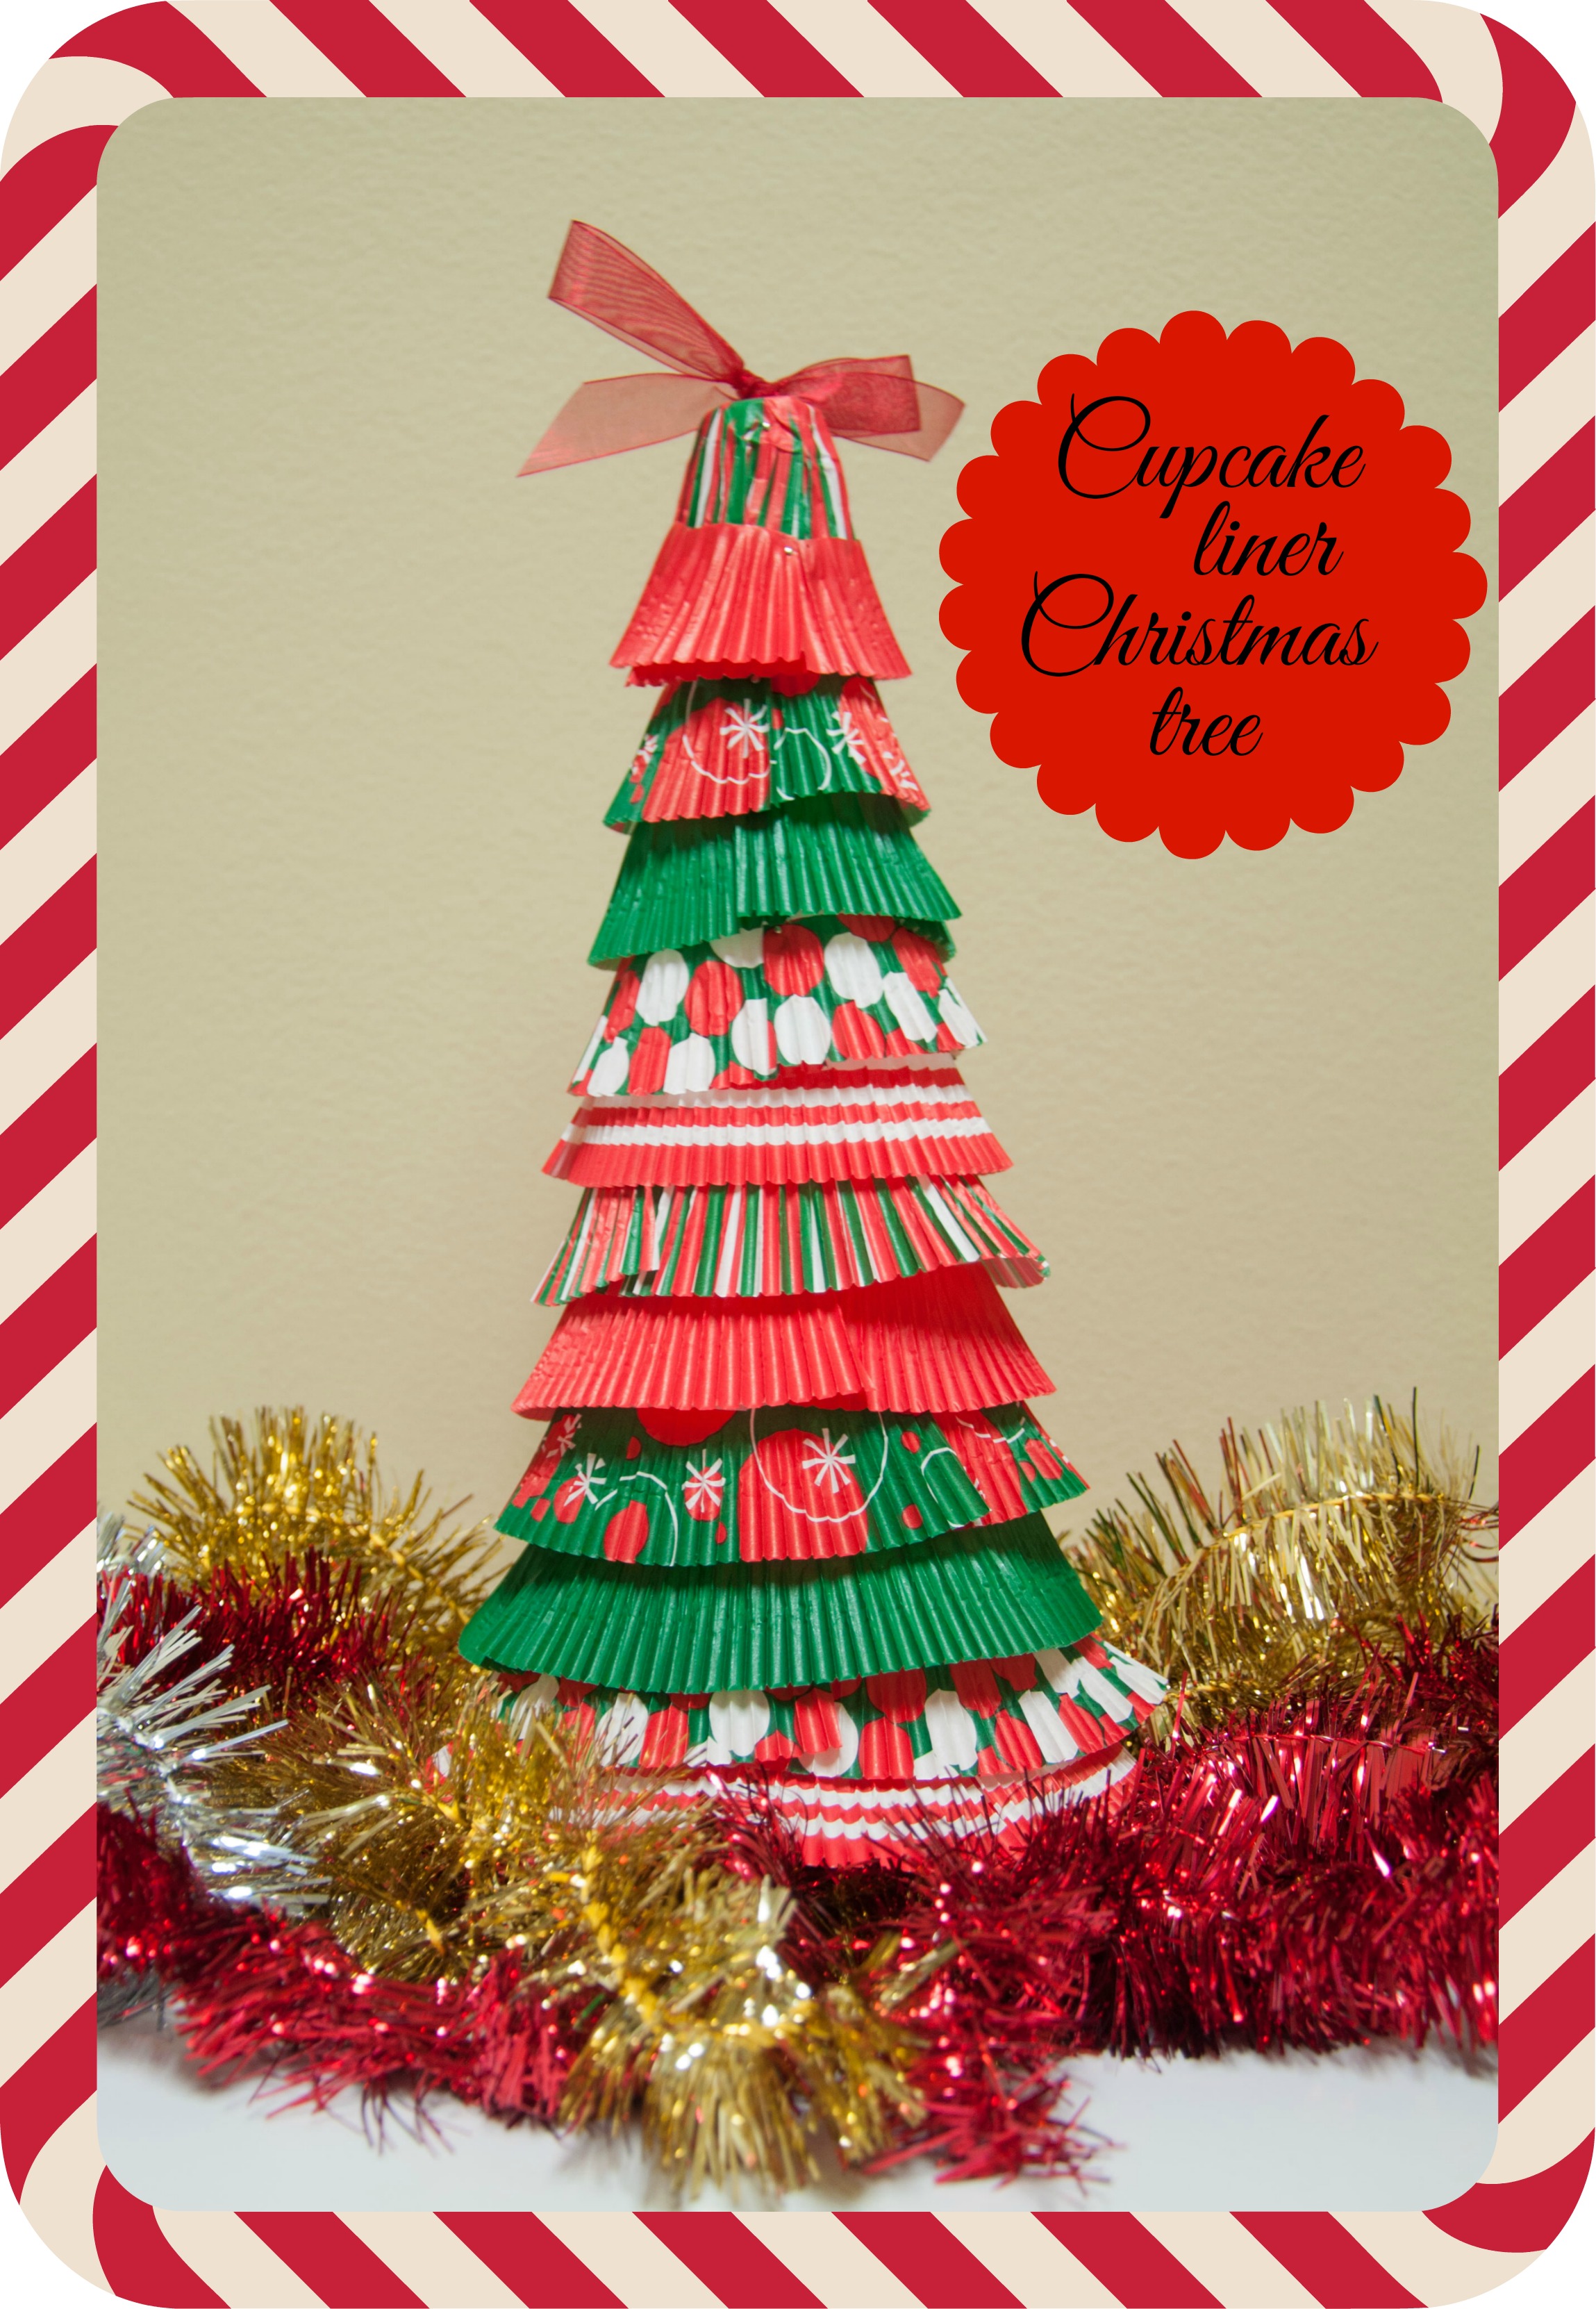 http://allthatglittersisgold.net/content/uploads/2013/12/Cupcake-liner-Christmas-Trees.jpg